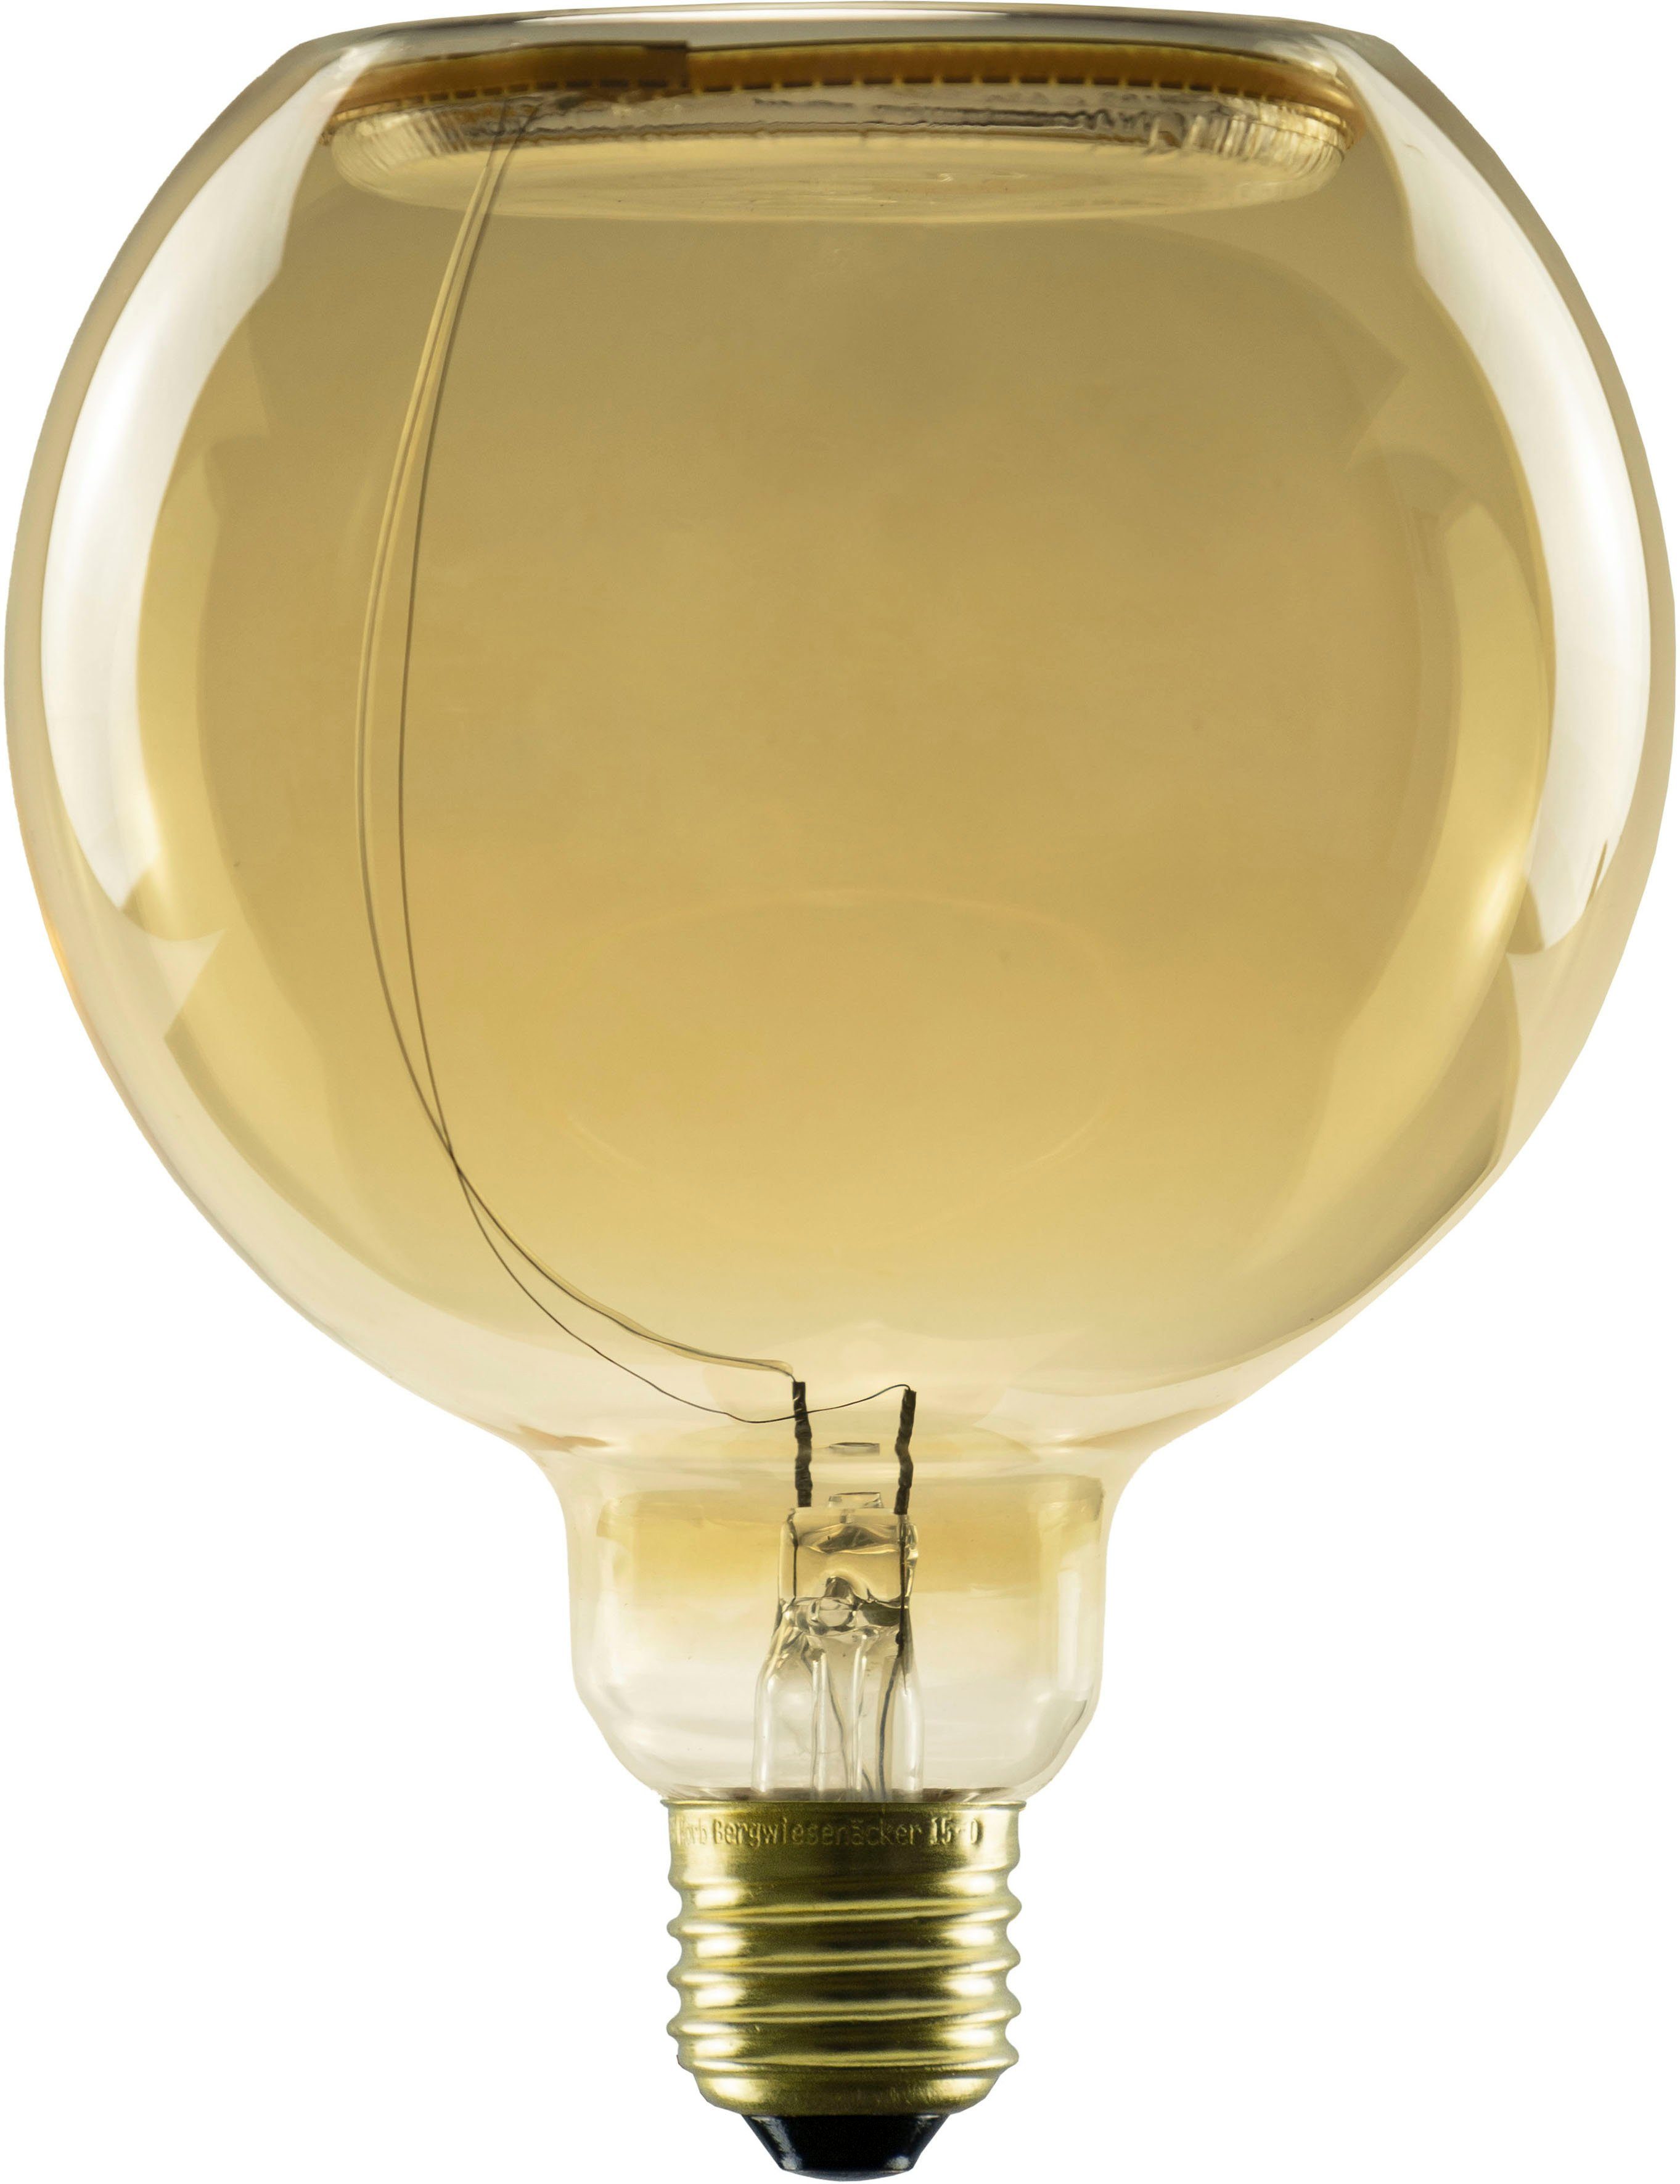 SEGULA LED-Leuchtmittel LED Extra-Warmweiß, 1 dimmbar, Aussenbereich 90, 125 gold, E27, 125 CRI St., Floating E27, Globe 4W, gold, Floating LED Globe